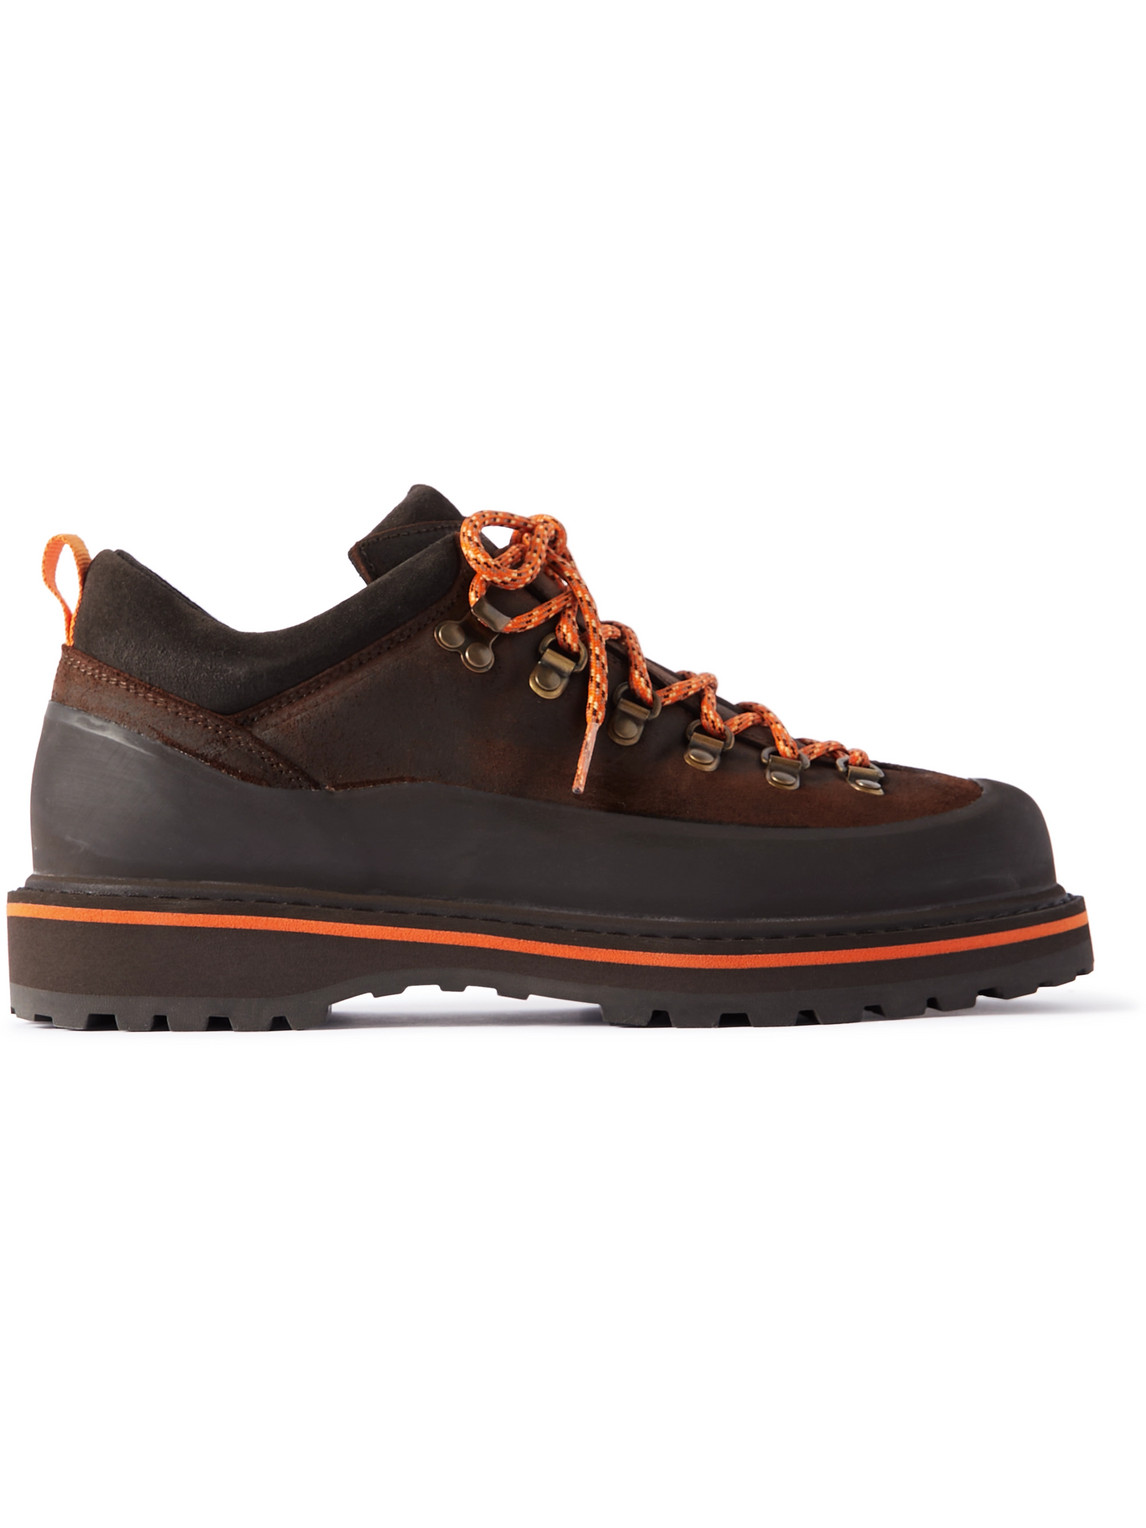 Diemme Roccia Basso Rubber-Trimmed Suede Hiking Boots